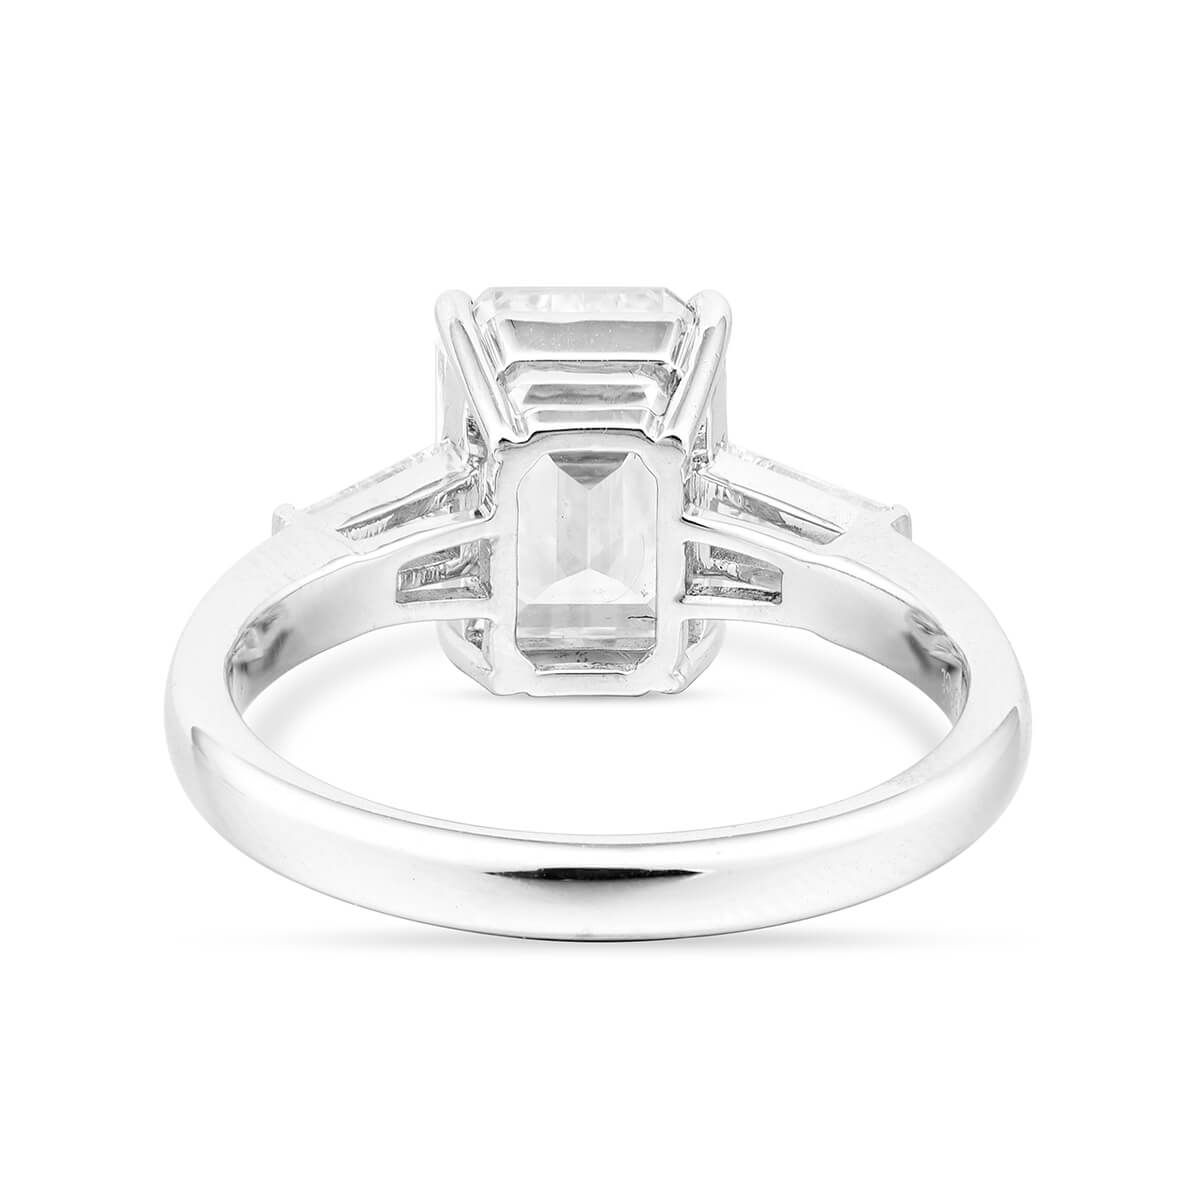  White Diamond Ring, 3.38 Ct. TW, Emerald shape, GIA Certified, 2217083945